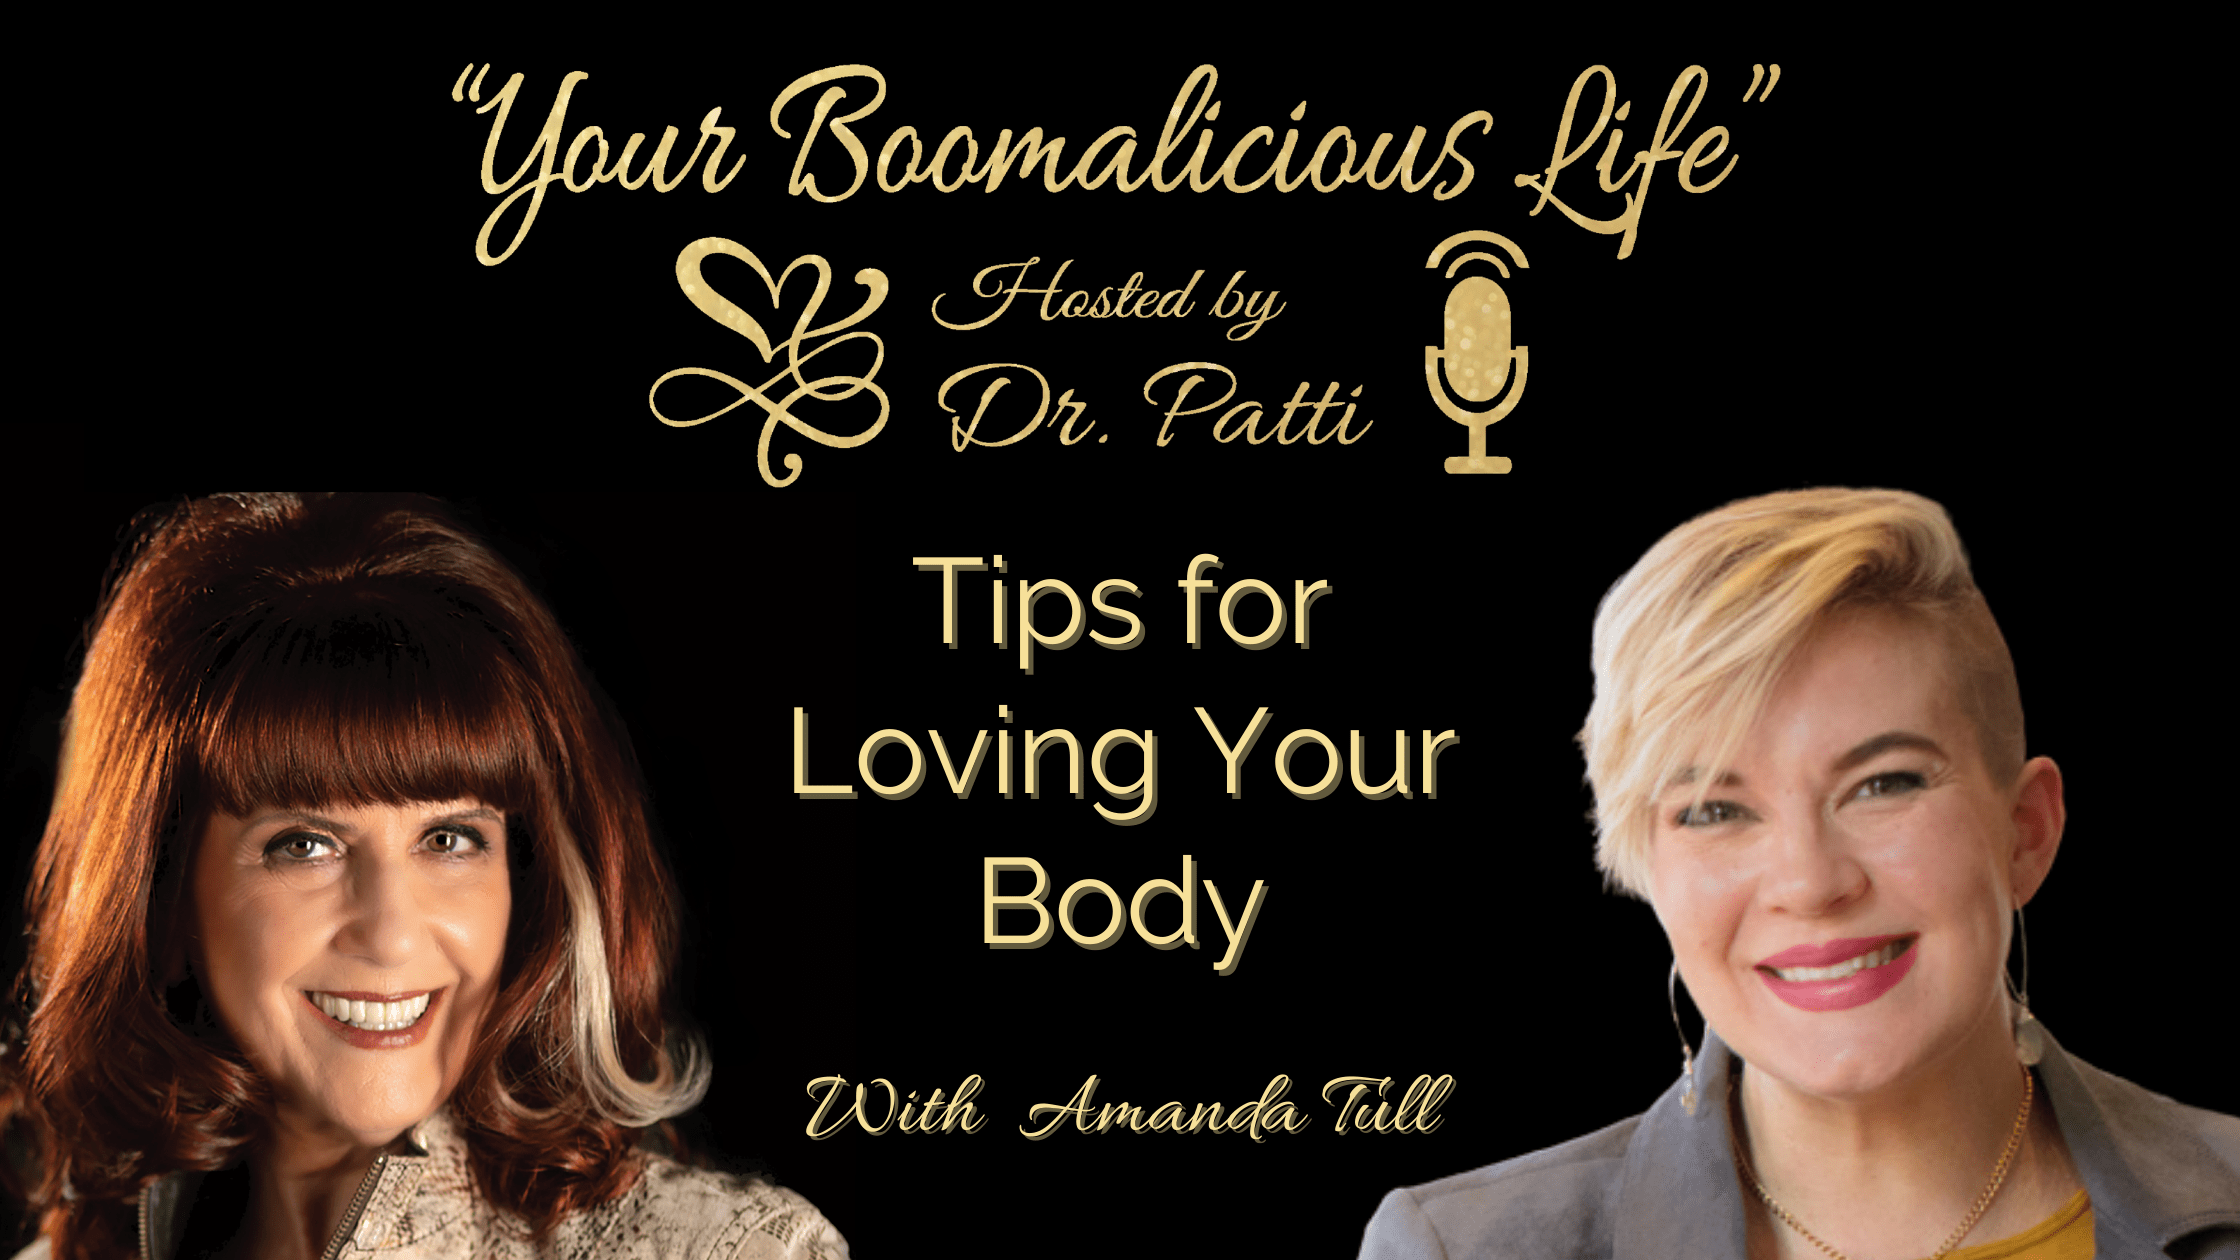 Amanda Tull presents "Tips for Loving Your Body"